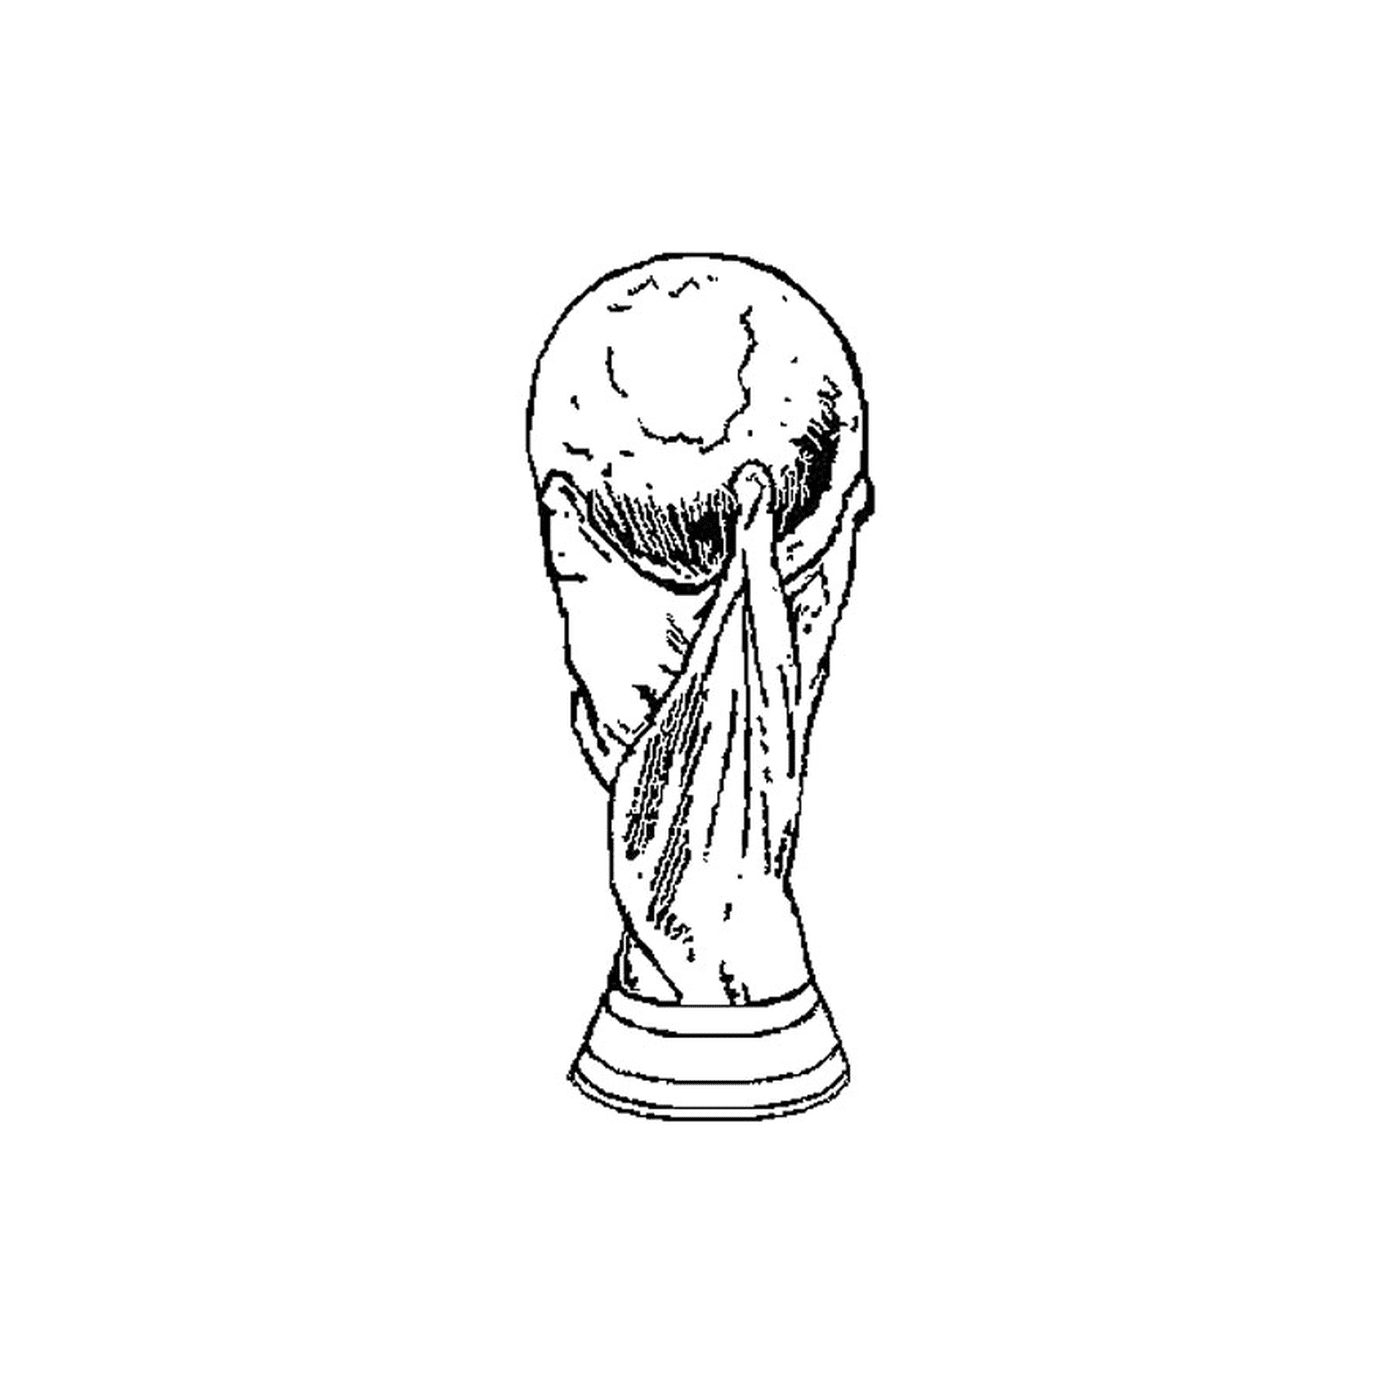  Copa do Mundo 